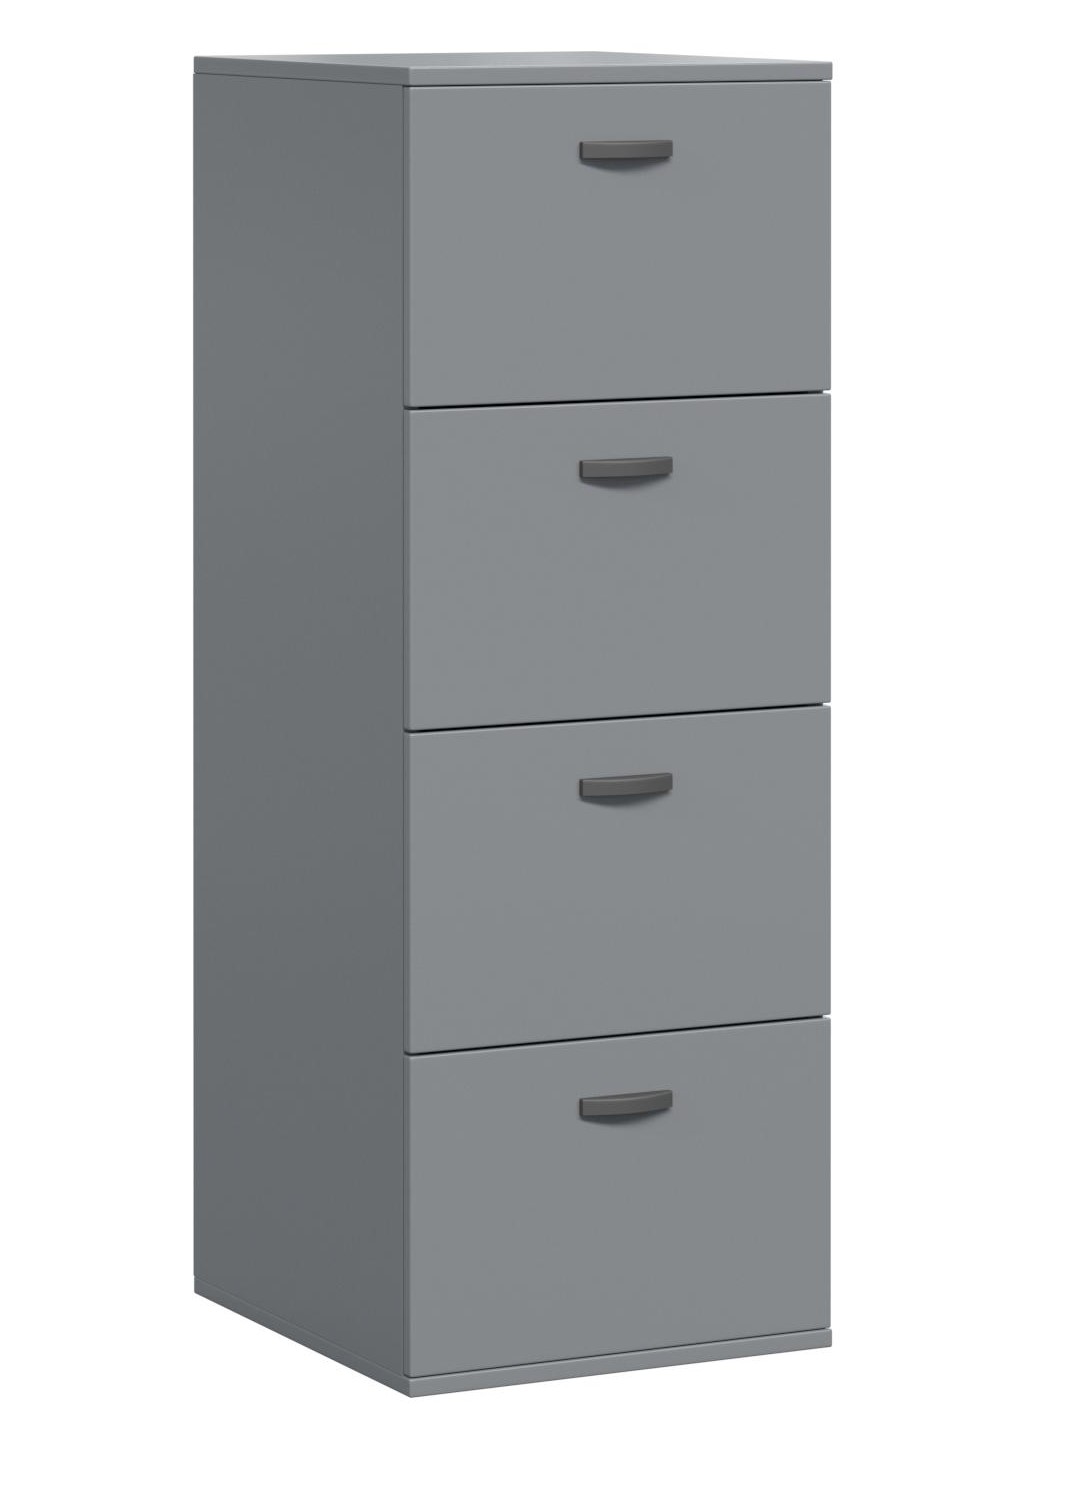 DK Filing Cabinets